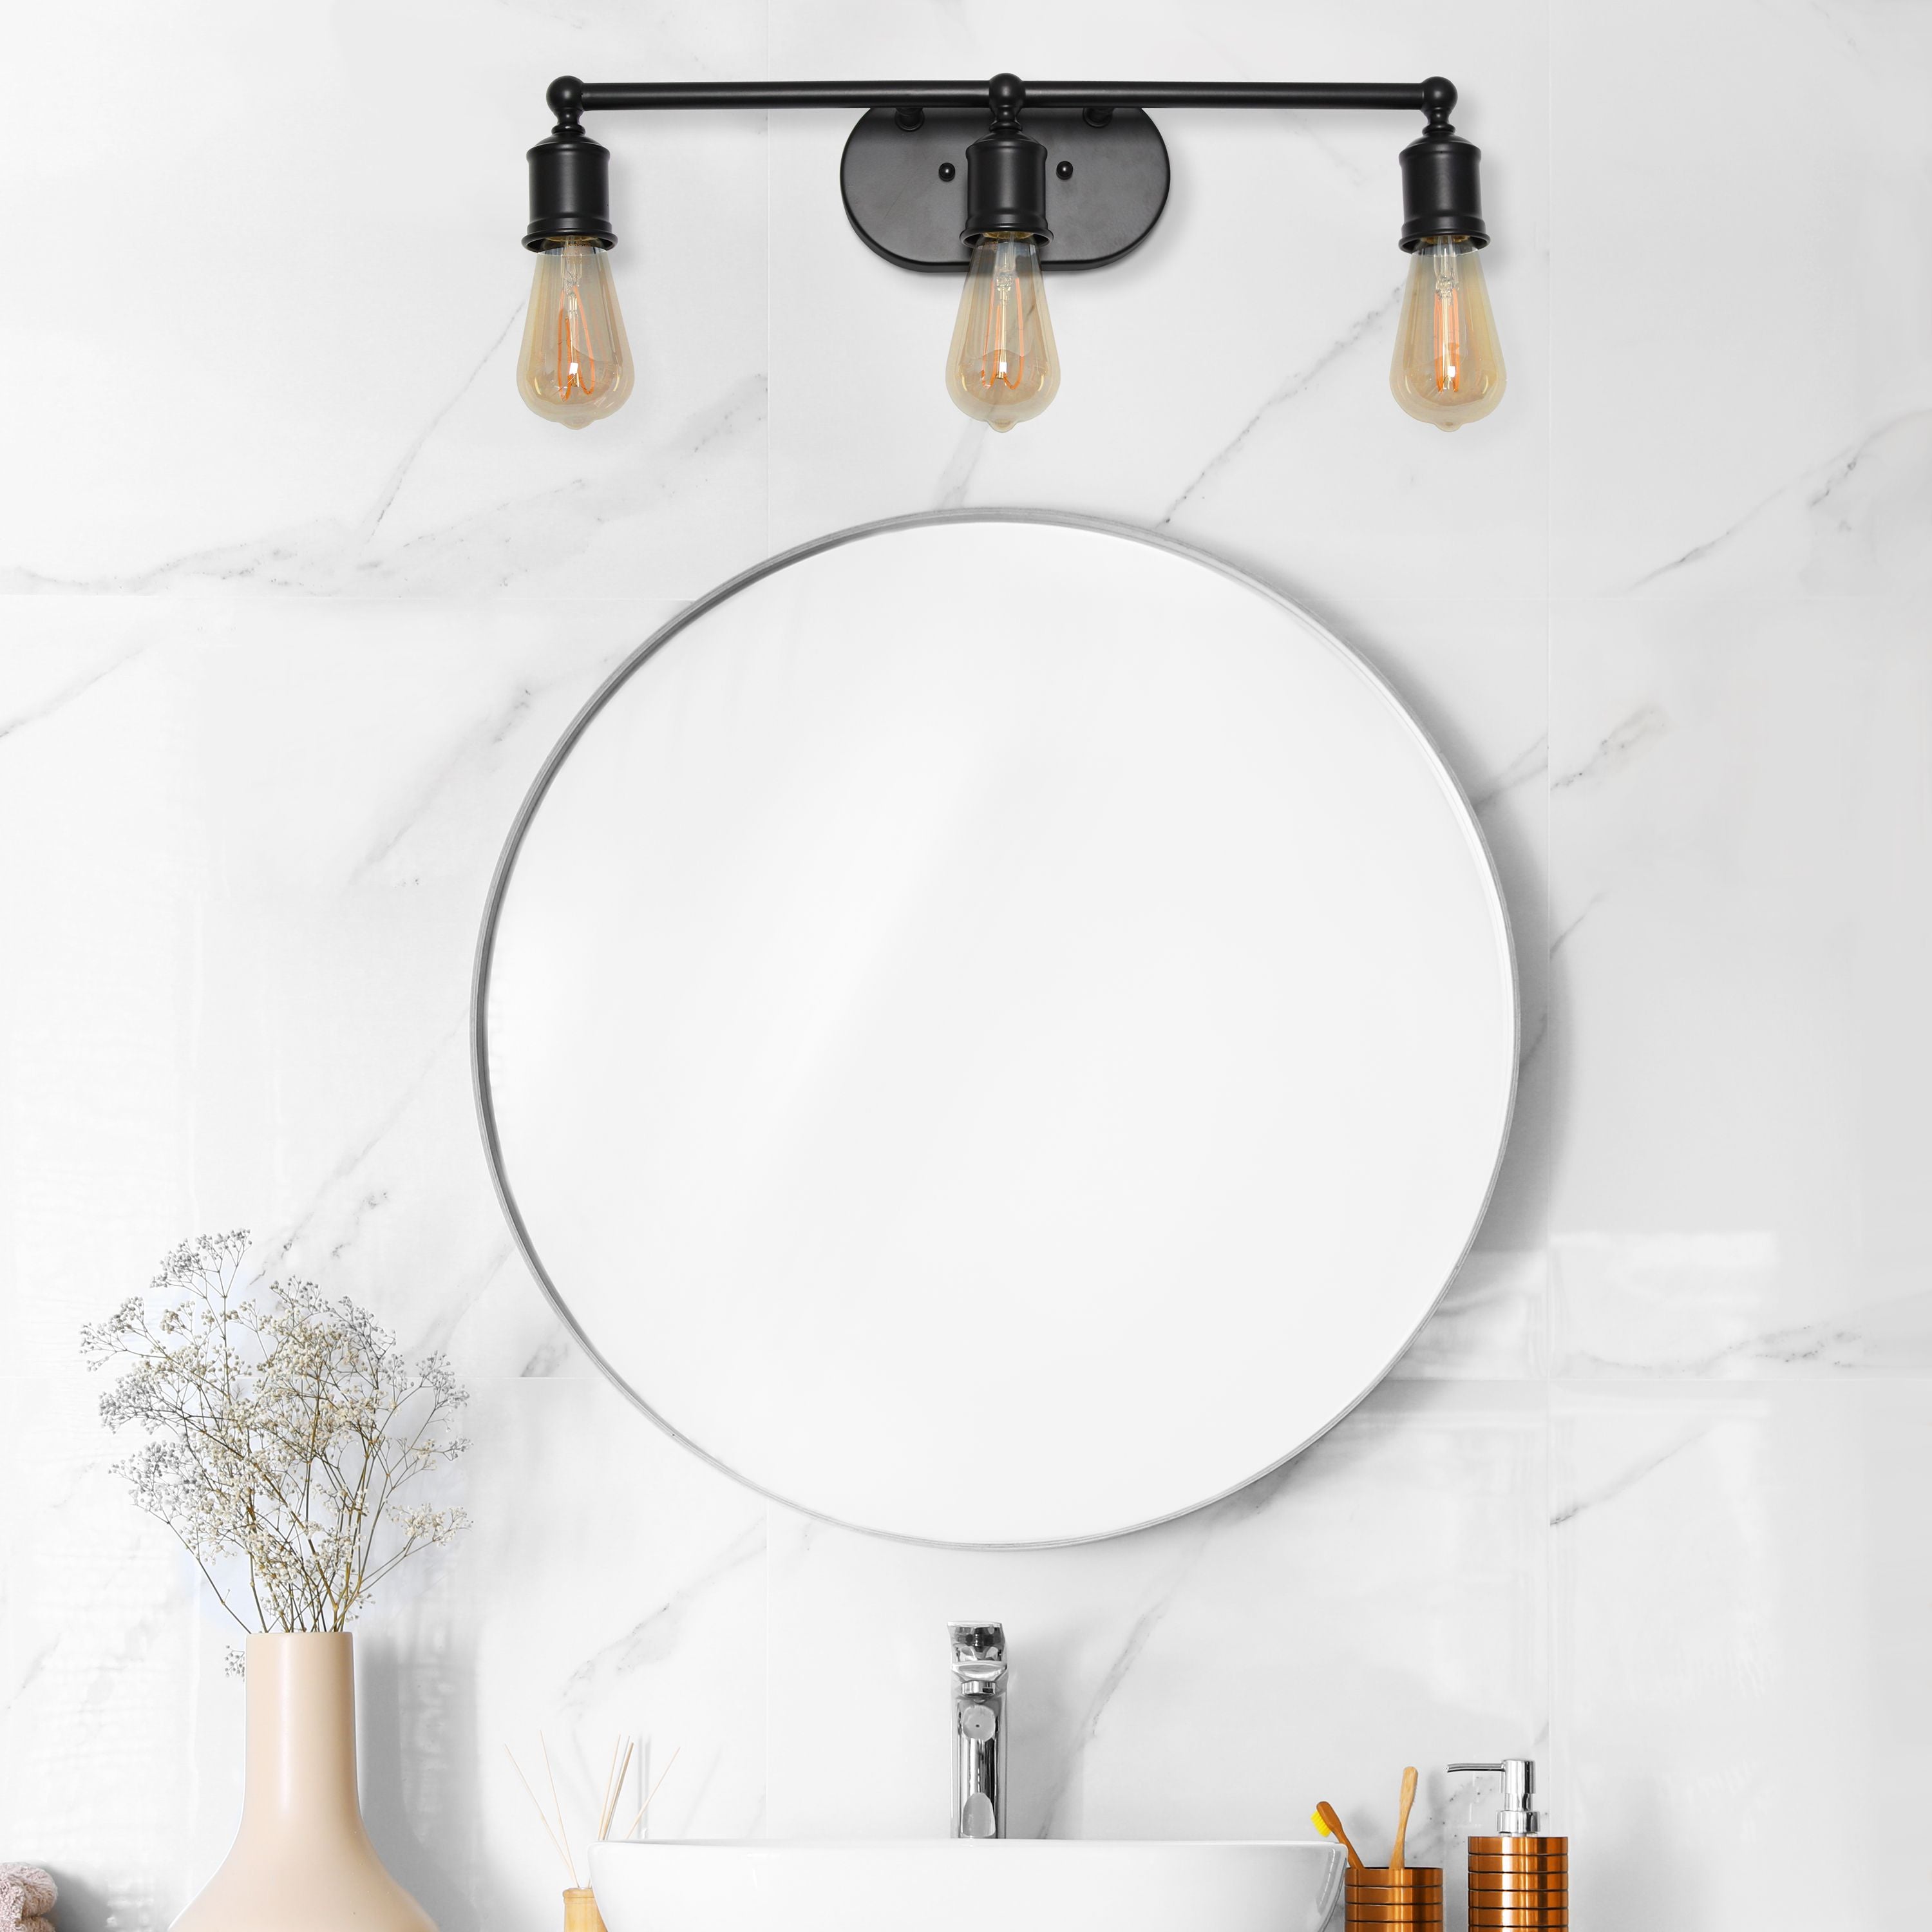 Lalia Home Industrial Metal Bathroom Vanity Light in Matte Black Finish